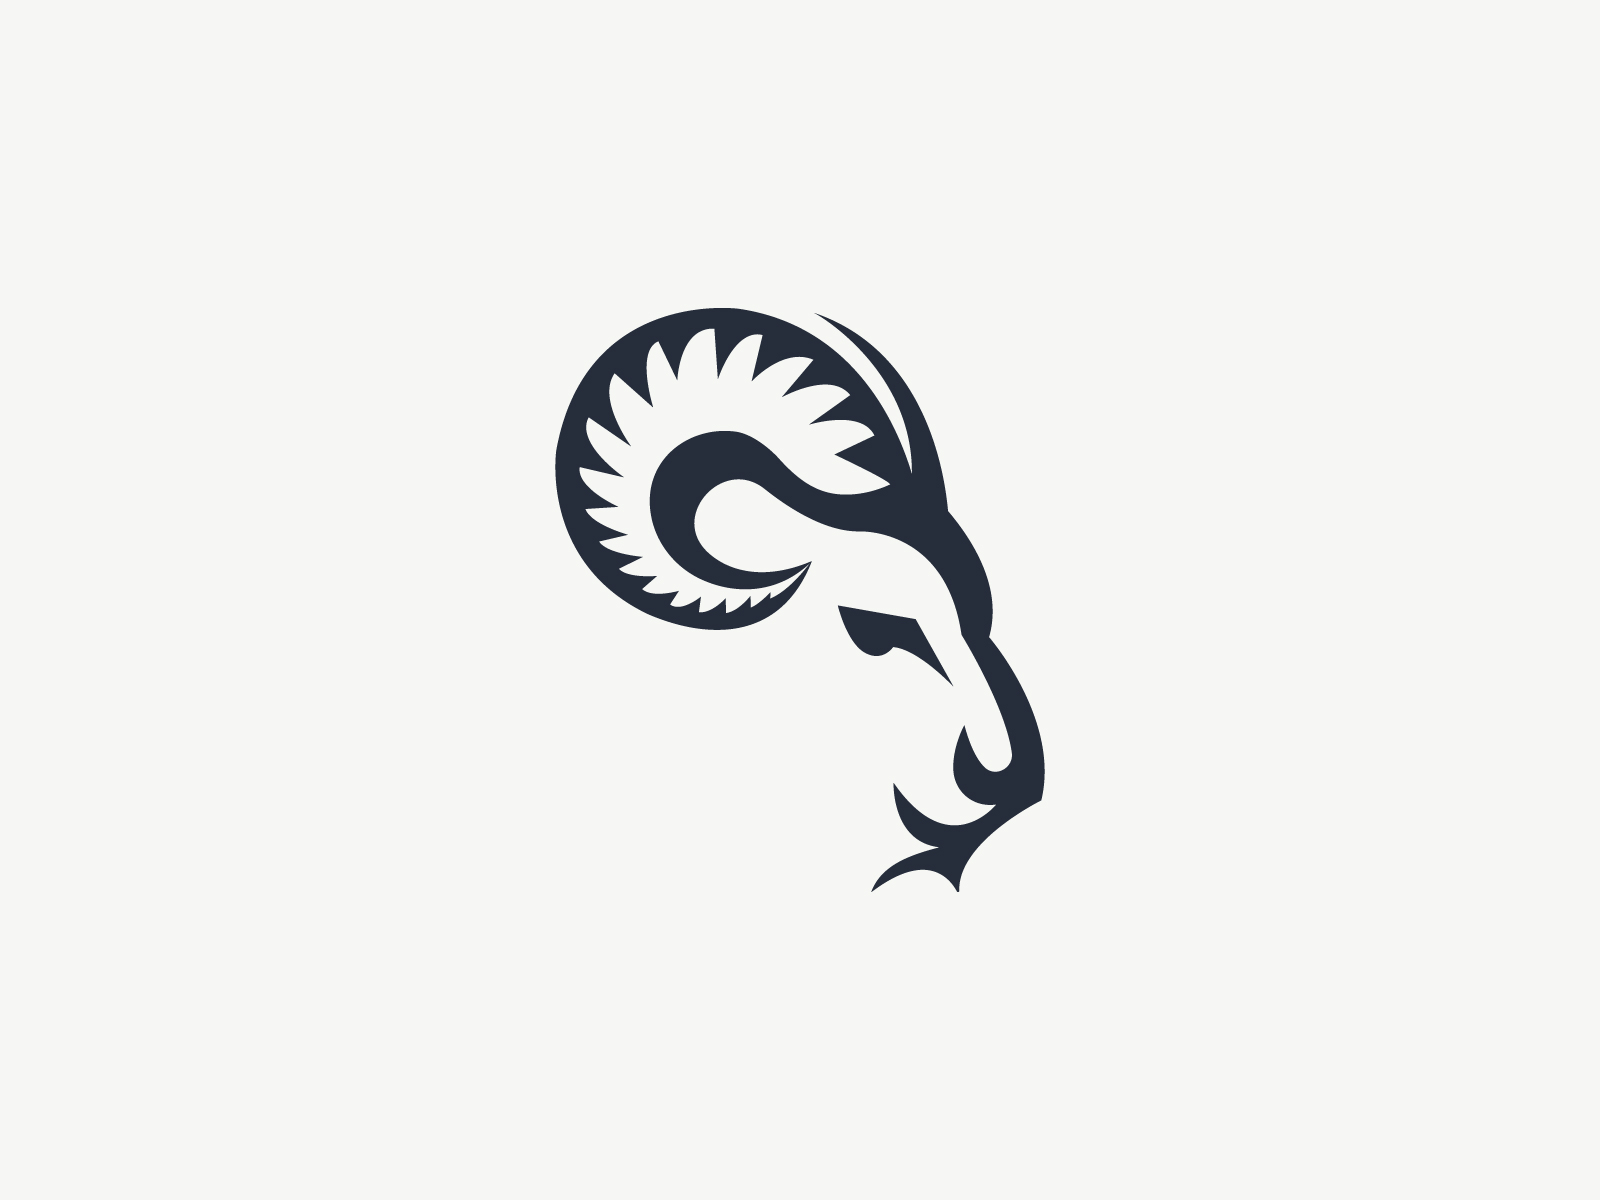 Sheep Logo by Designcute on Dribbble